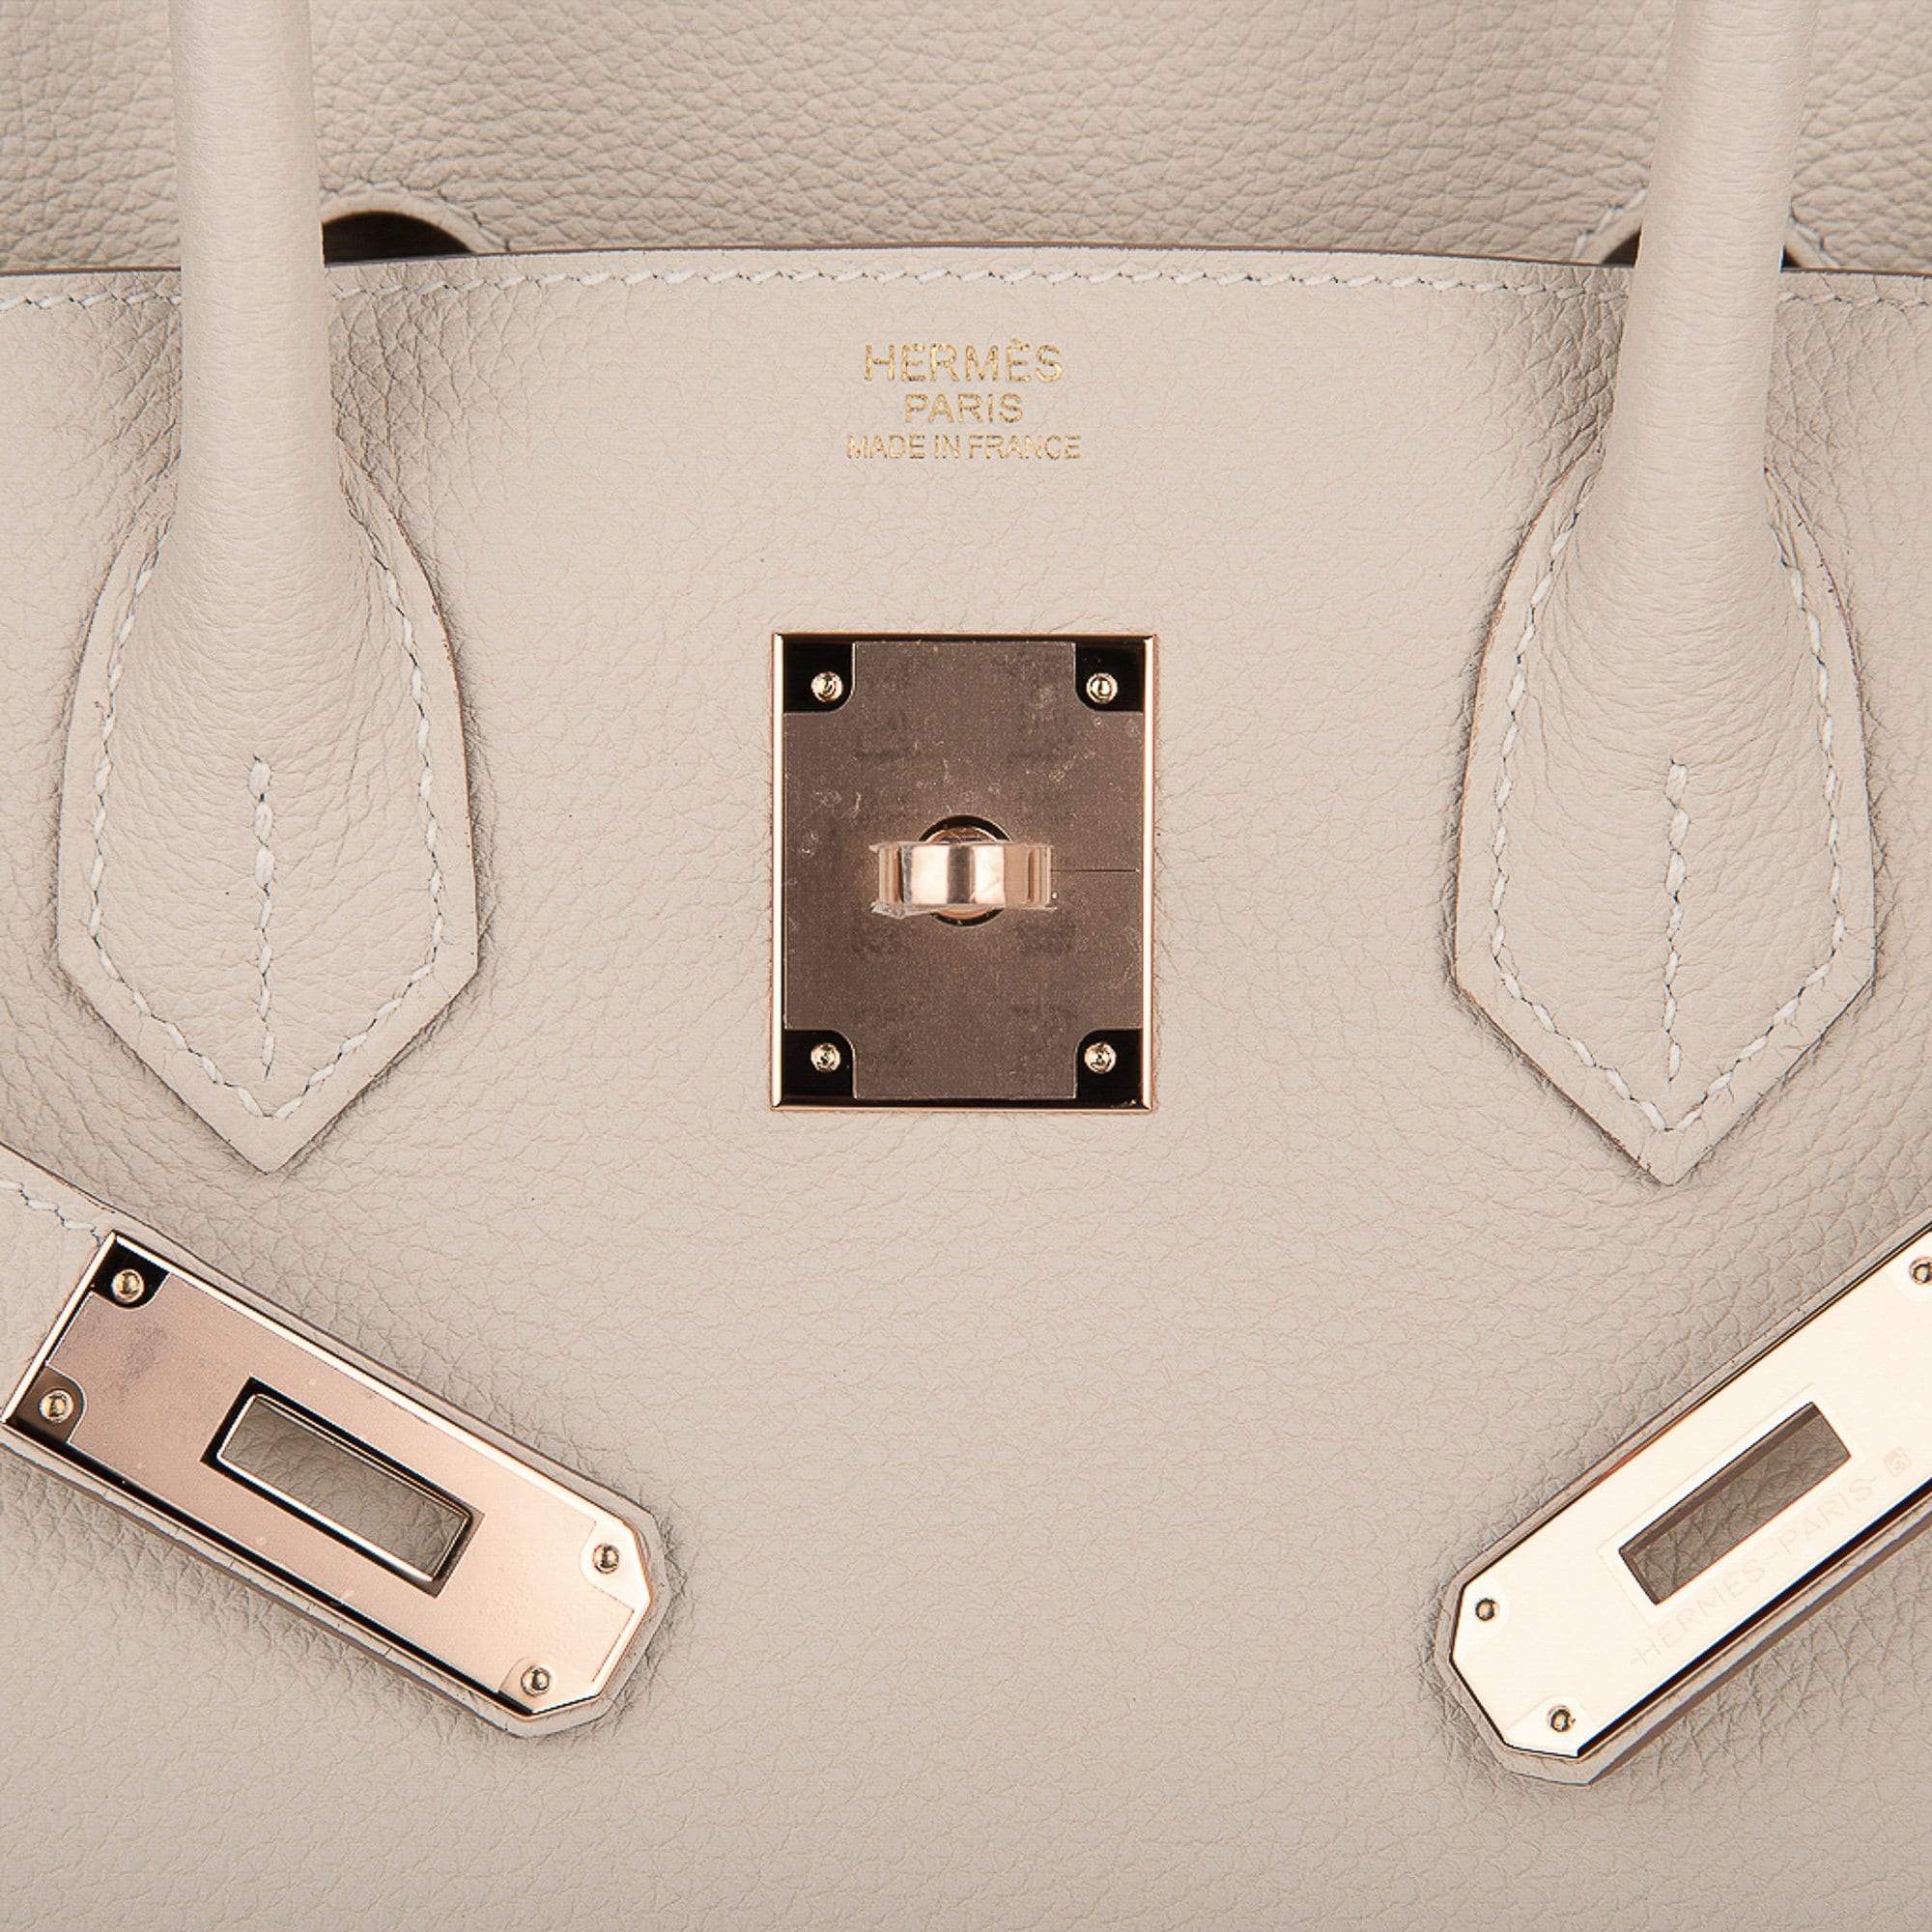 Hermes Birkin 30 Craie Togo Rose Gold Hardware Ivory Madison Avenue Couture